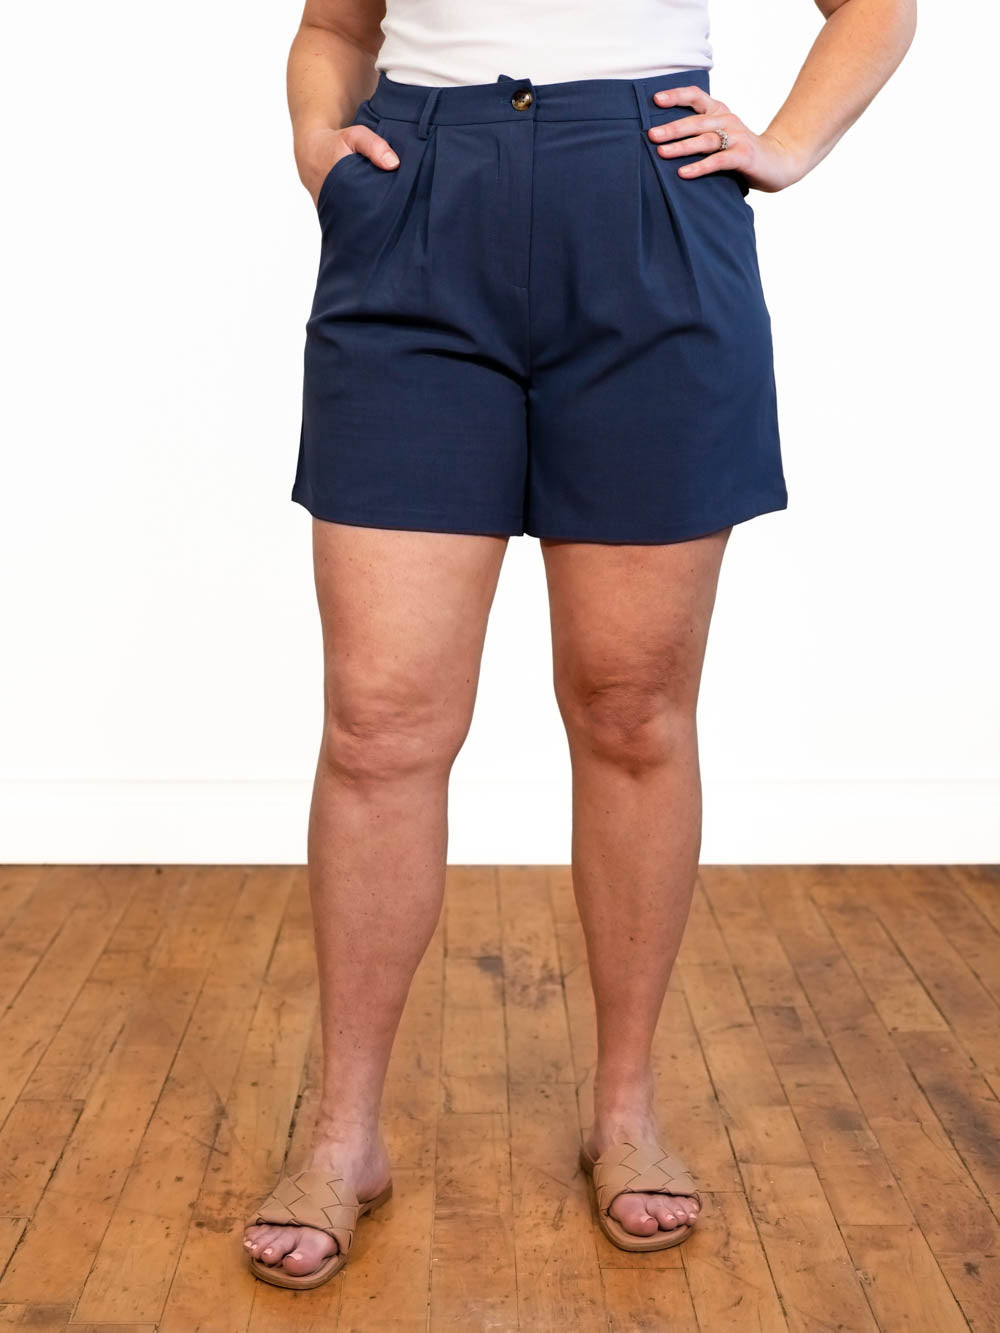 Long Inseam Shorts for Tall Women